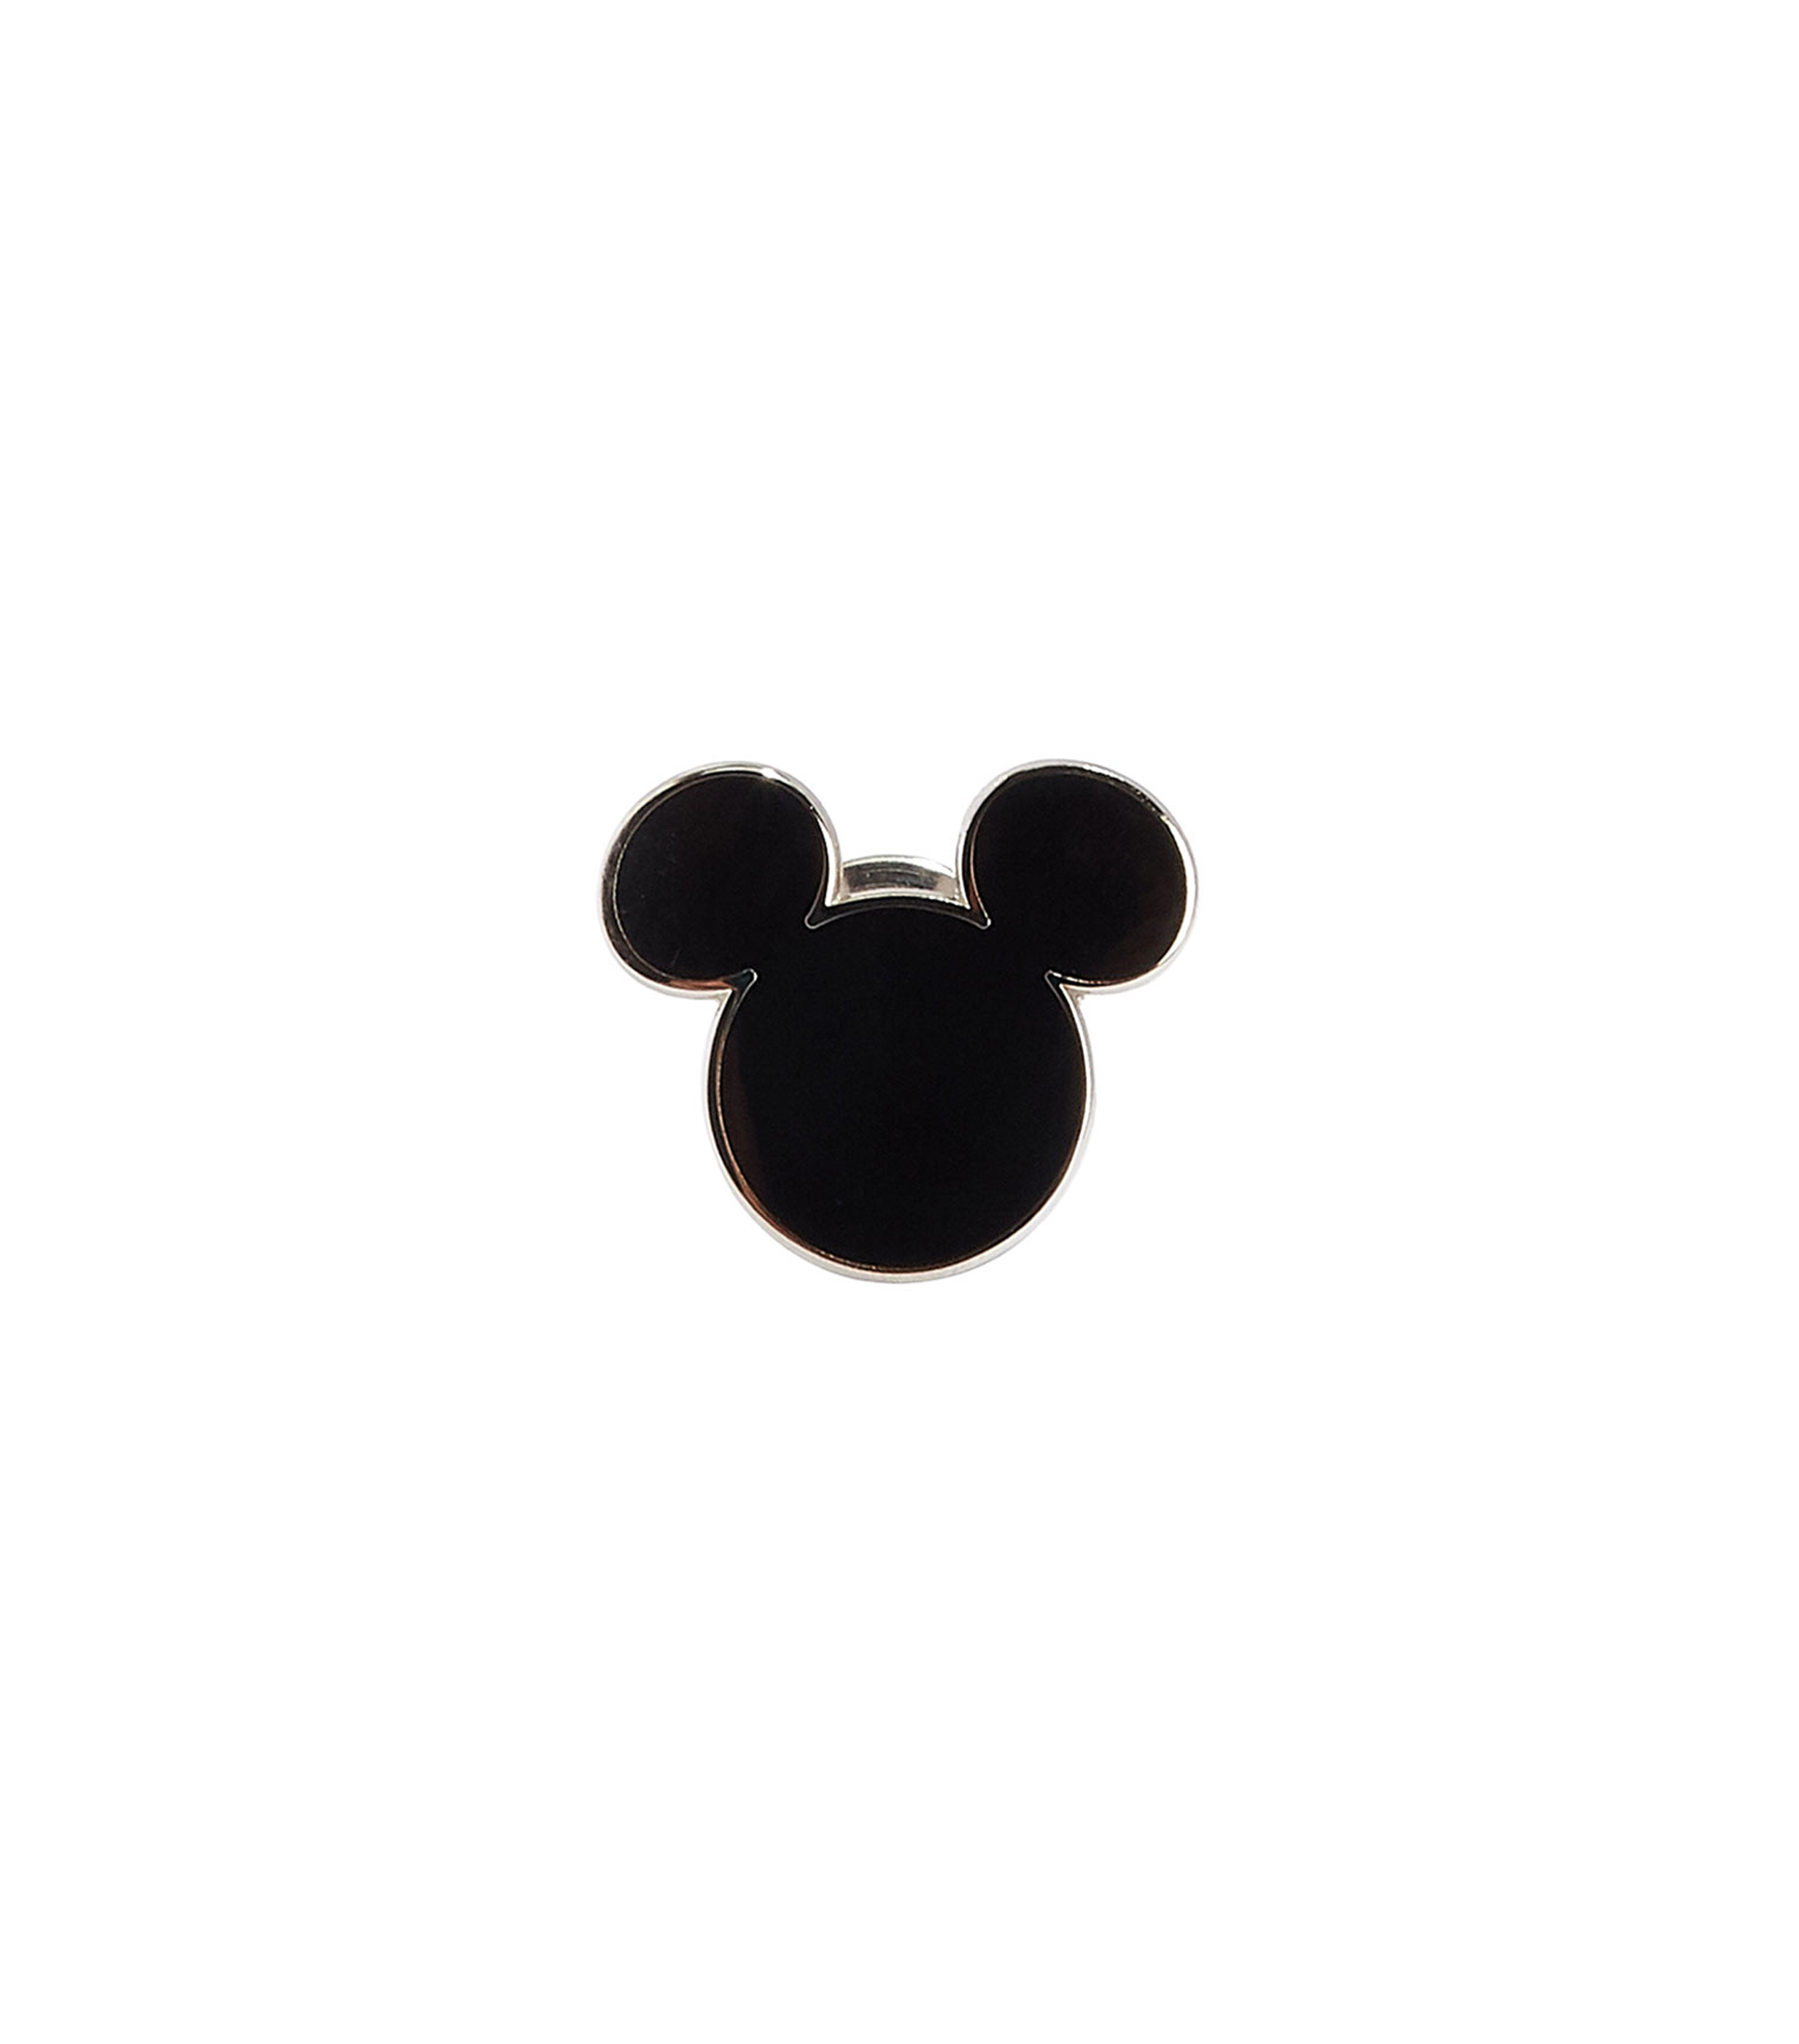 Cartera bordada con cabeza de Mickey Mouse de Disney, tarjetero